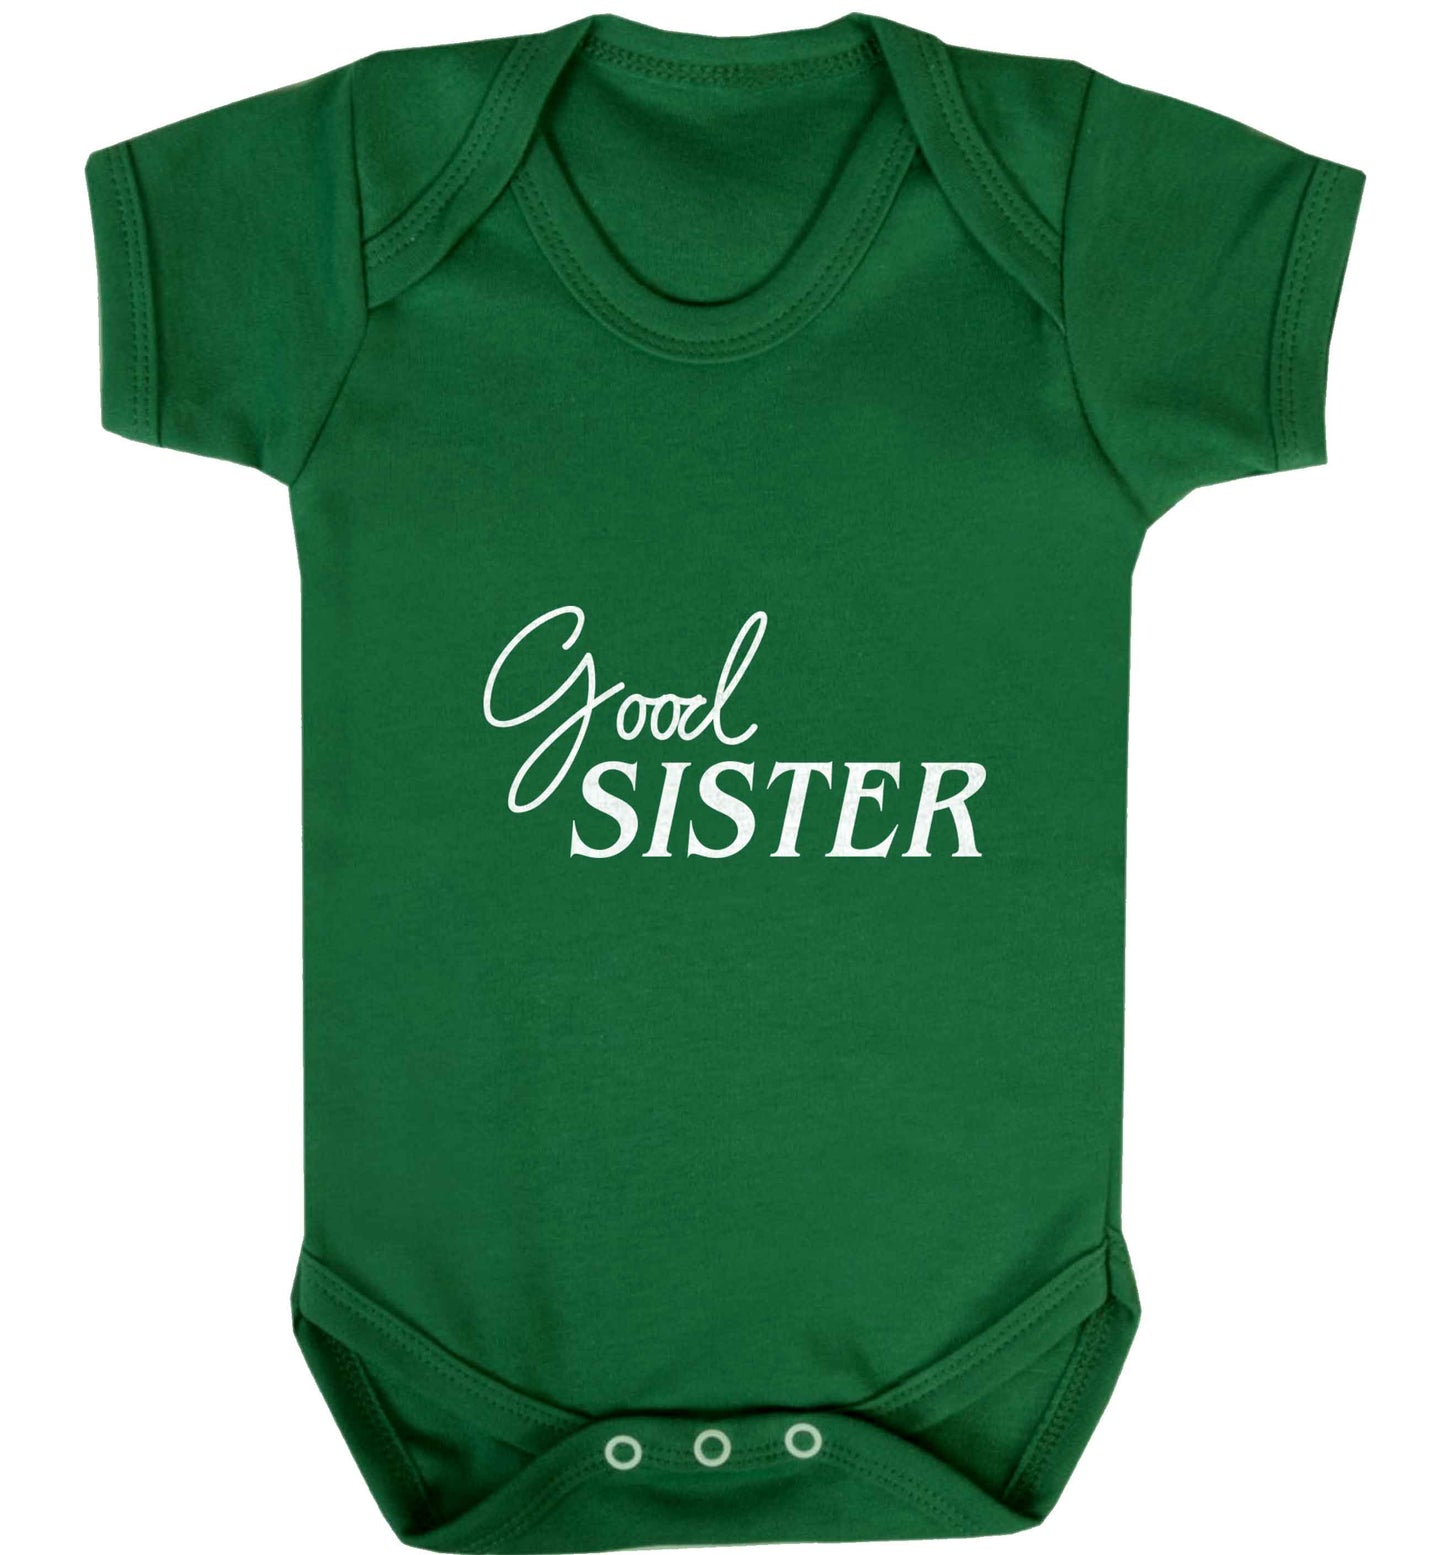 Good sister baby vest green 18-24 months